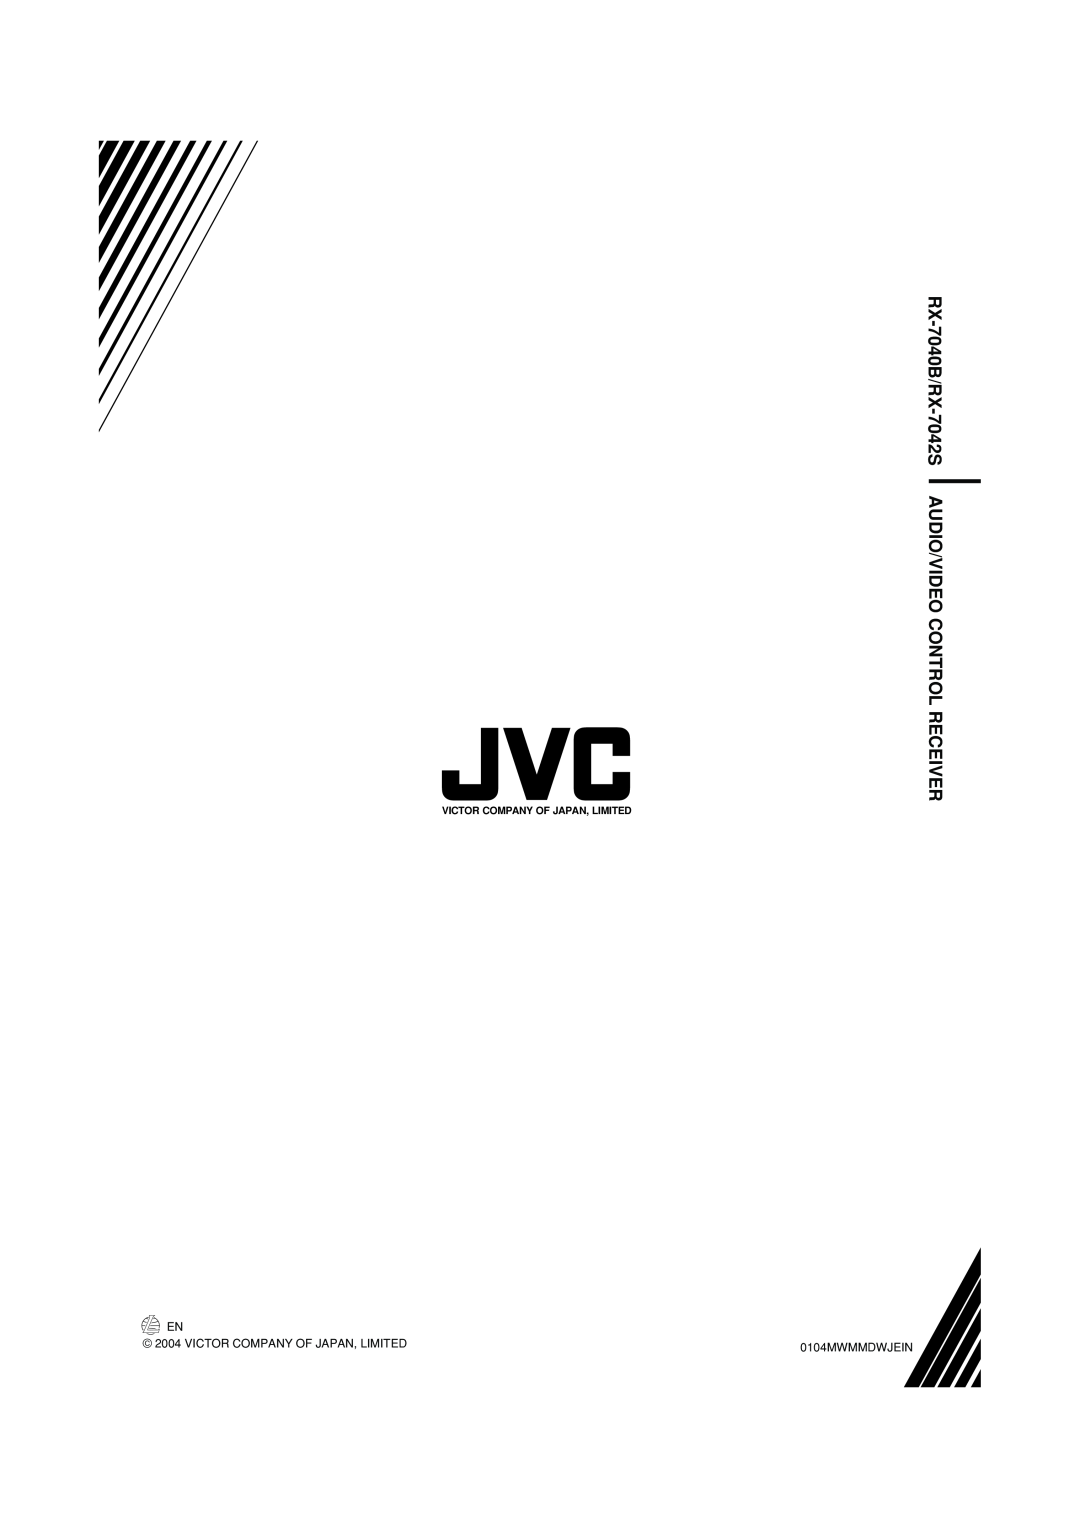 JVC manual RX-7040B/RX-7042SAUDIO/VIDEO CONTROL RECEIVER, Victor Company Of Japan, Limited, 0104MWMMDWJEIN 